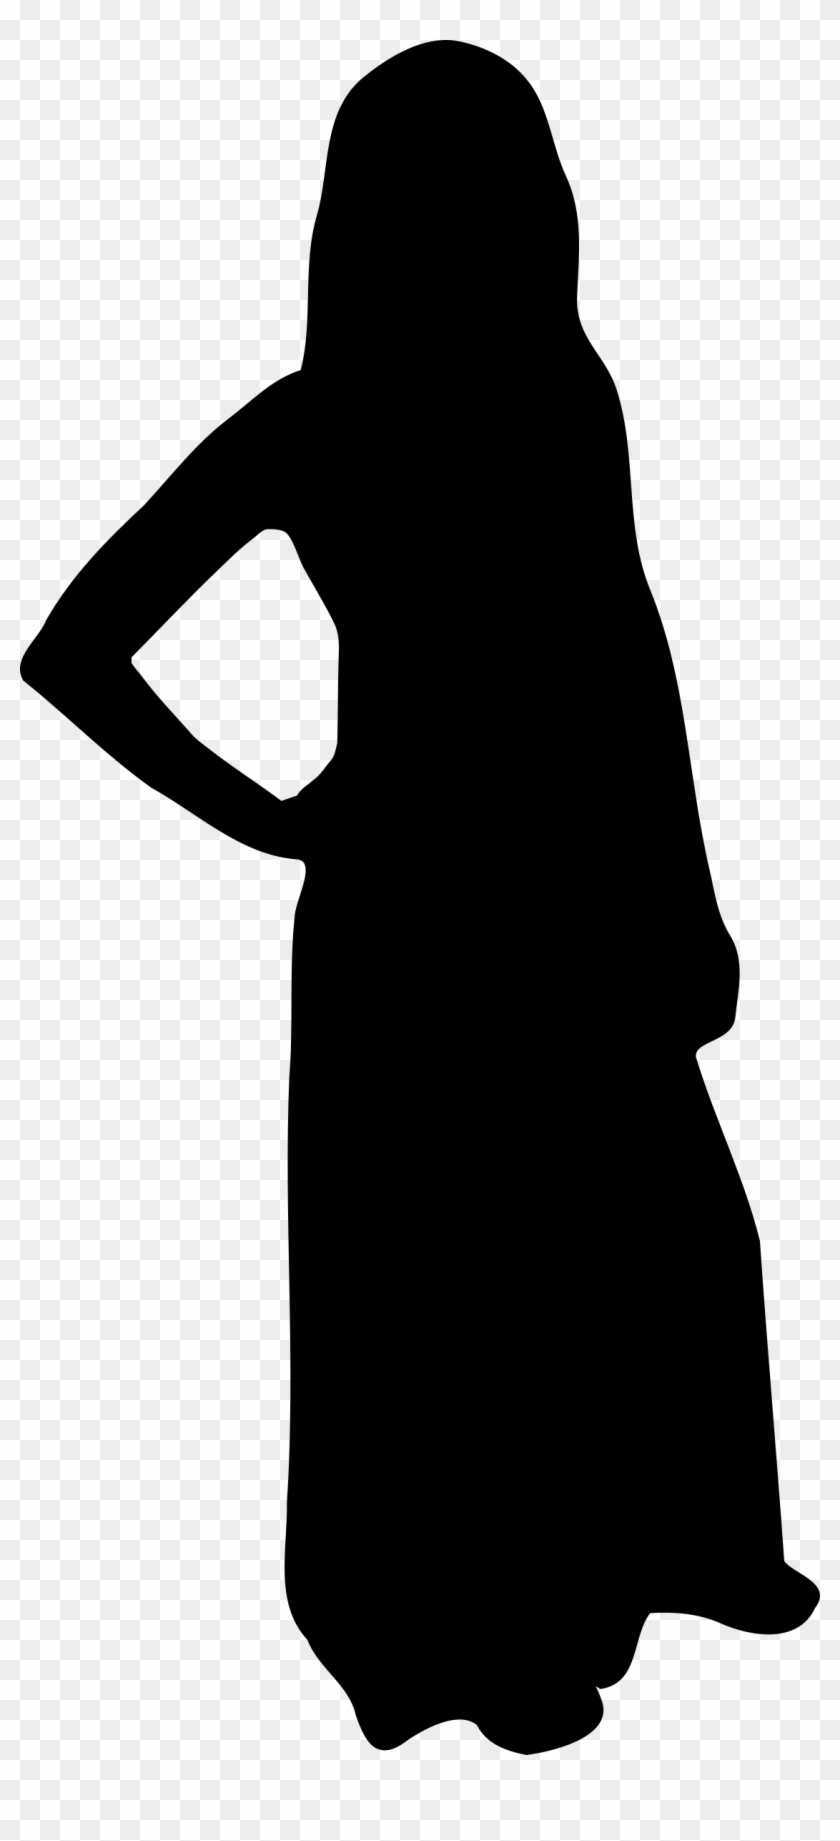 Public Domain Clip Art Image Illustration Of A Female - Muslim Woman Silhouette #15083